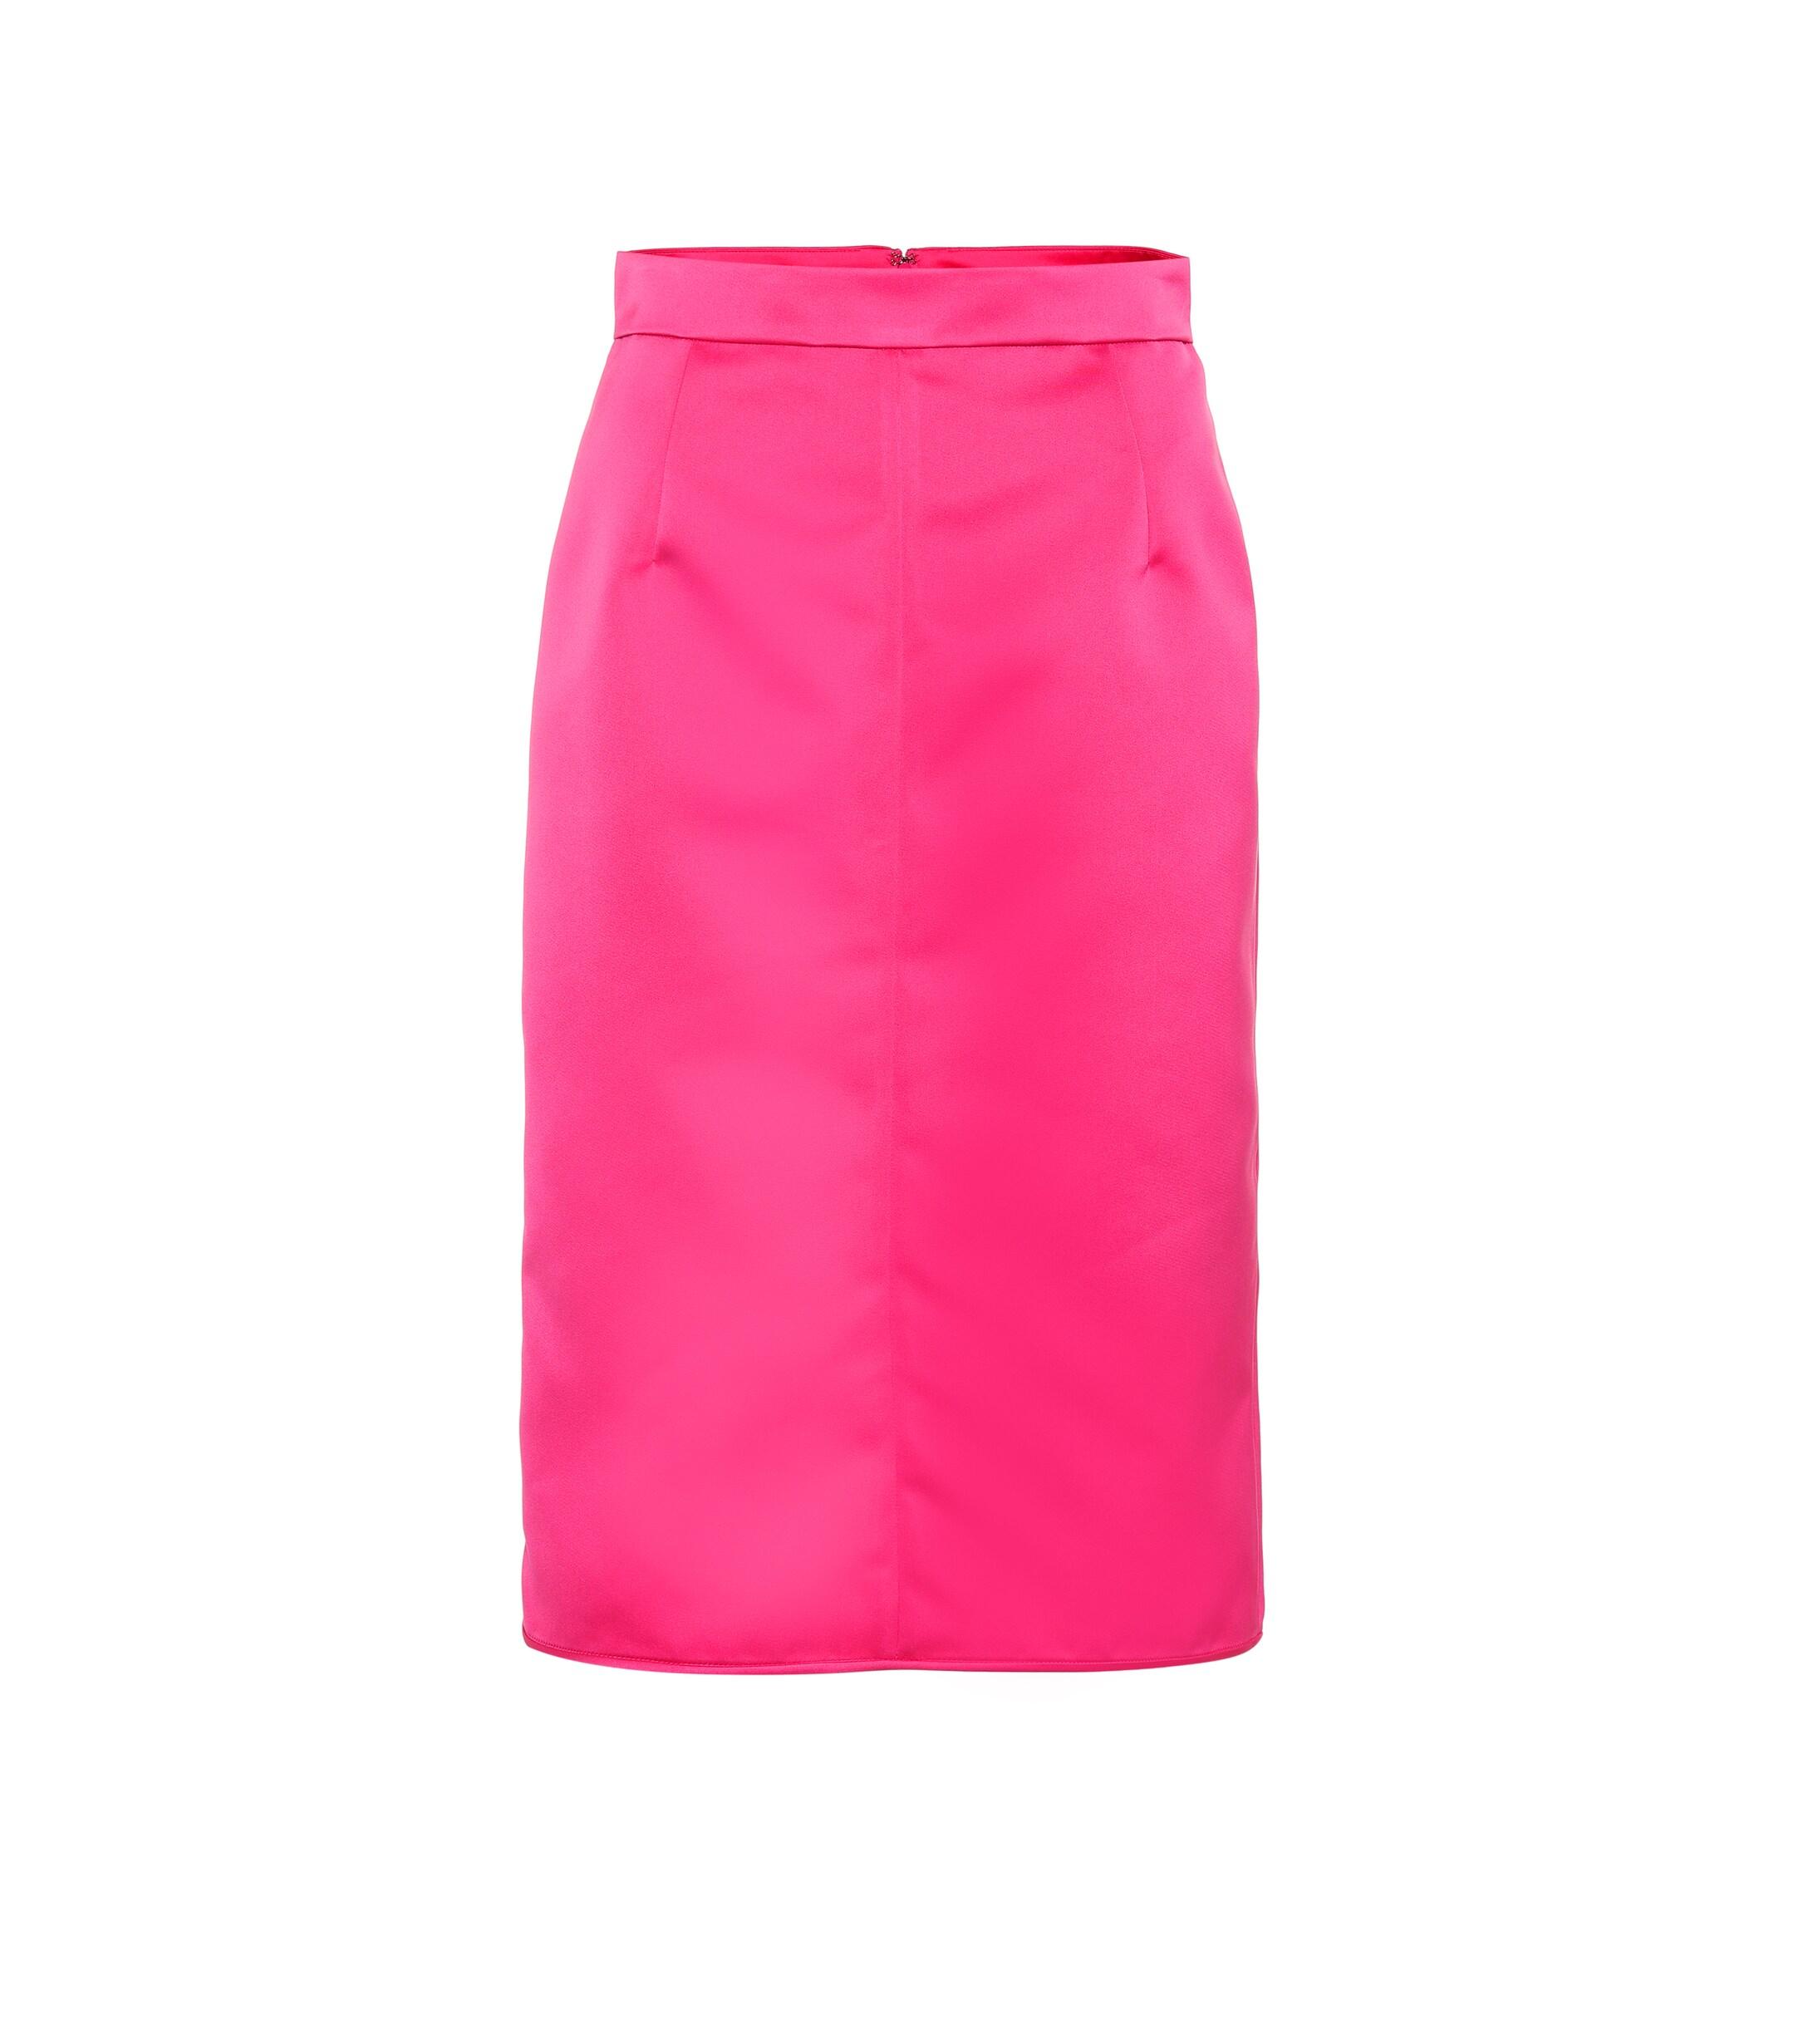 N°21 High-rise Satin Pencil Skirt in Fuchsia (Pink) - Save 40% - Lyst